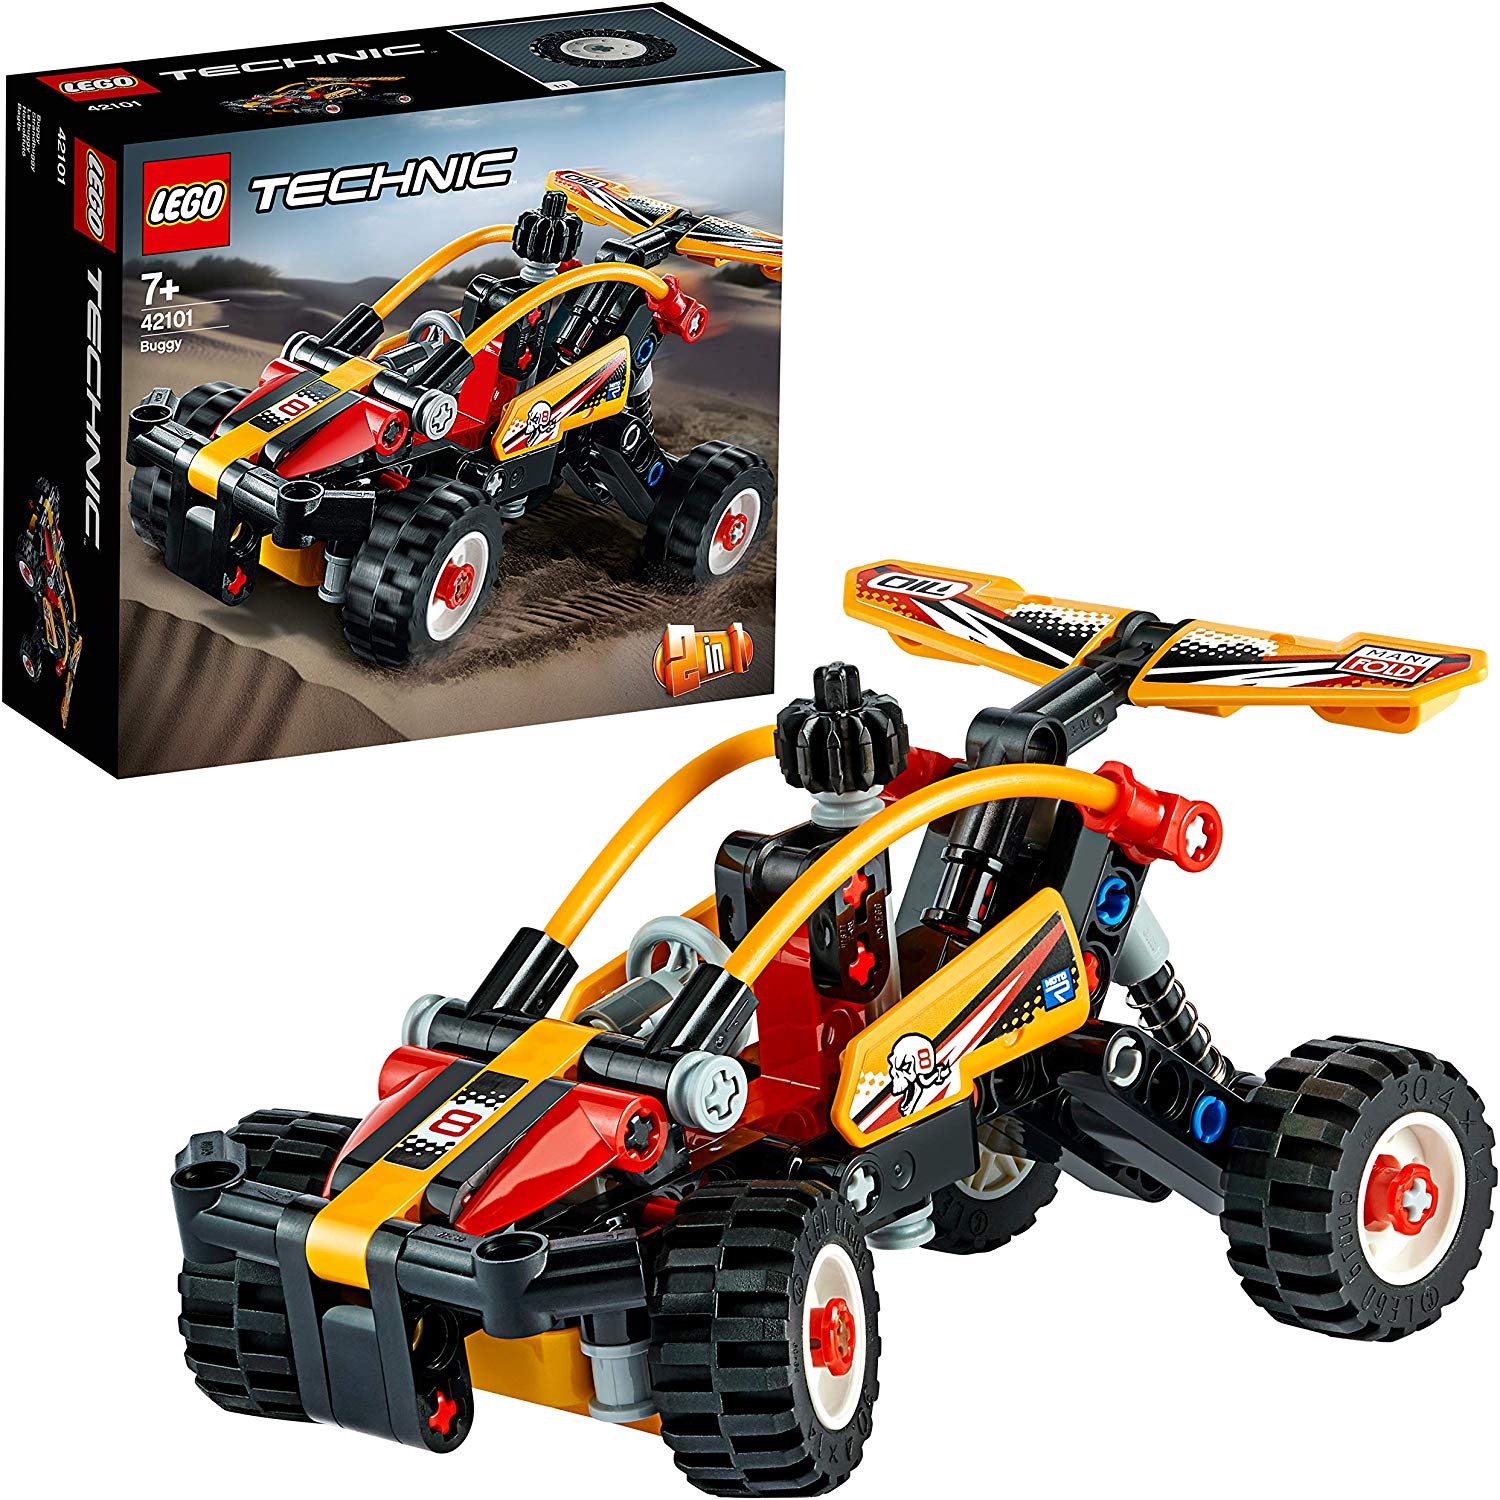 Lego Technic 42101 Beach Buggy Construction Set